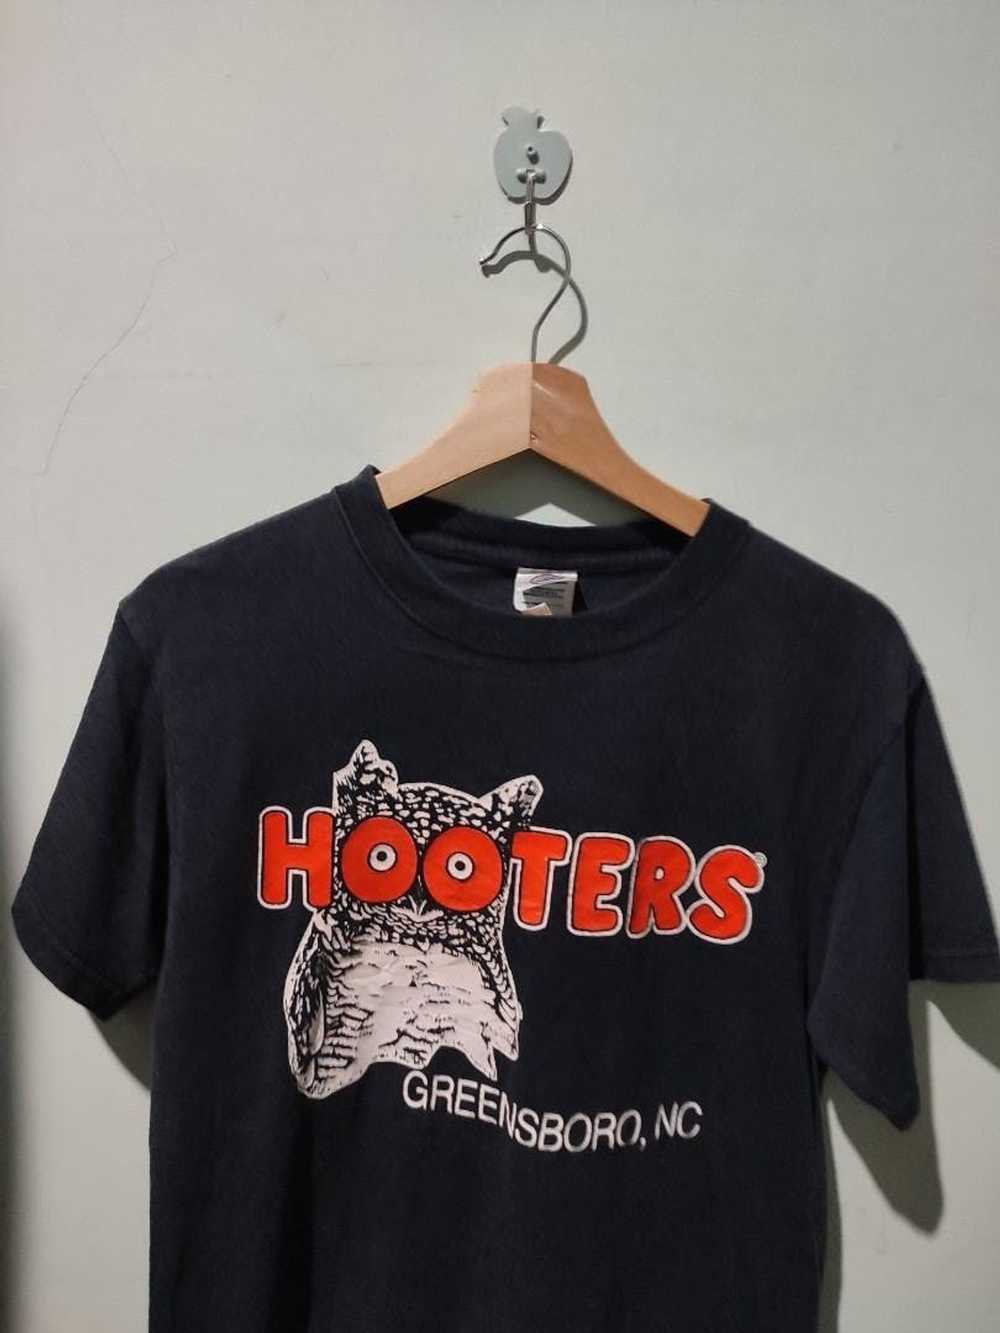 Vintage Vintage hooters Greensboro NC shirt size s - image 2